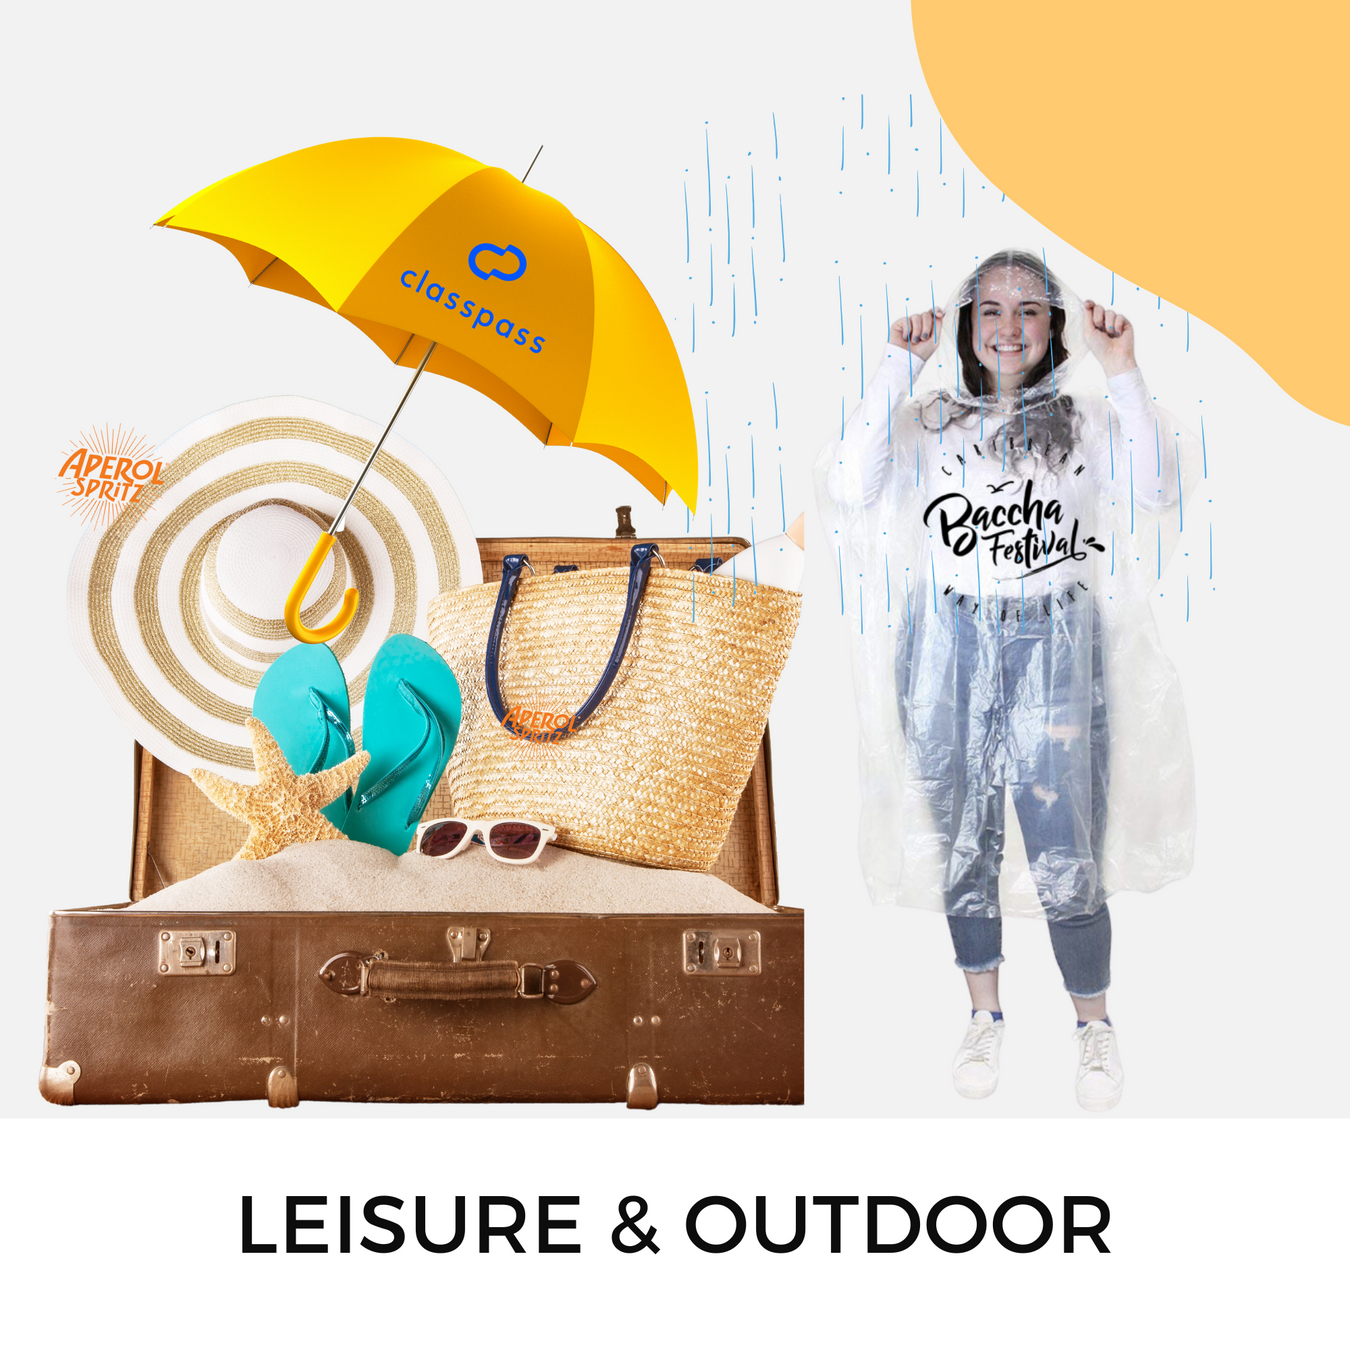 Leisure & Outdoor